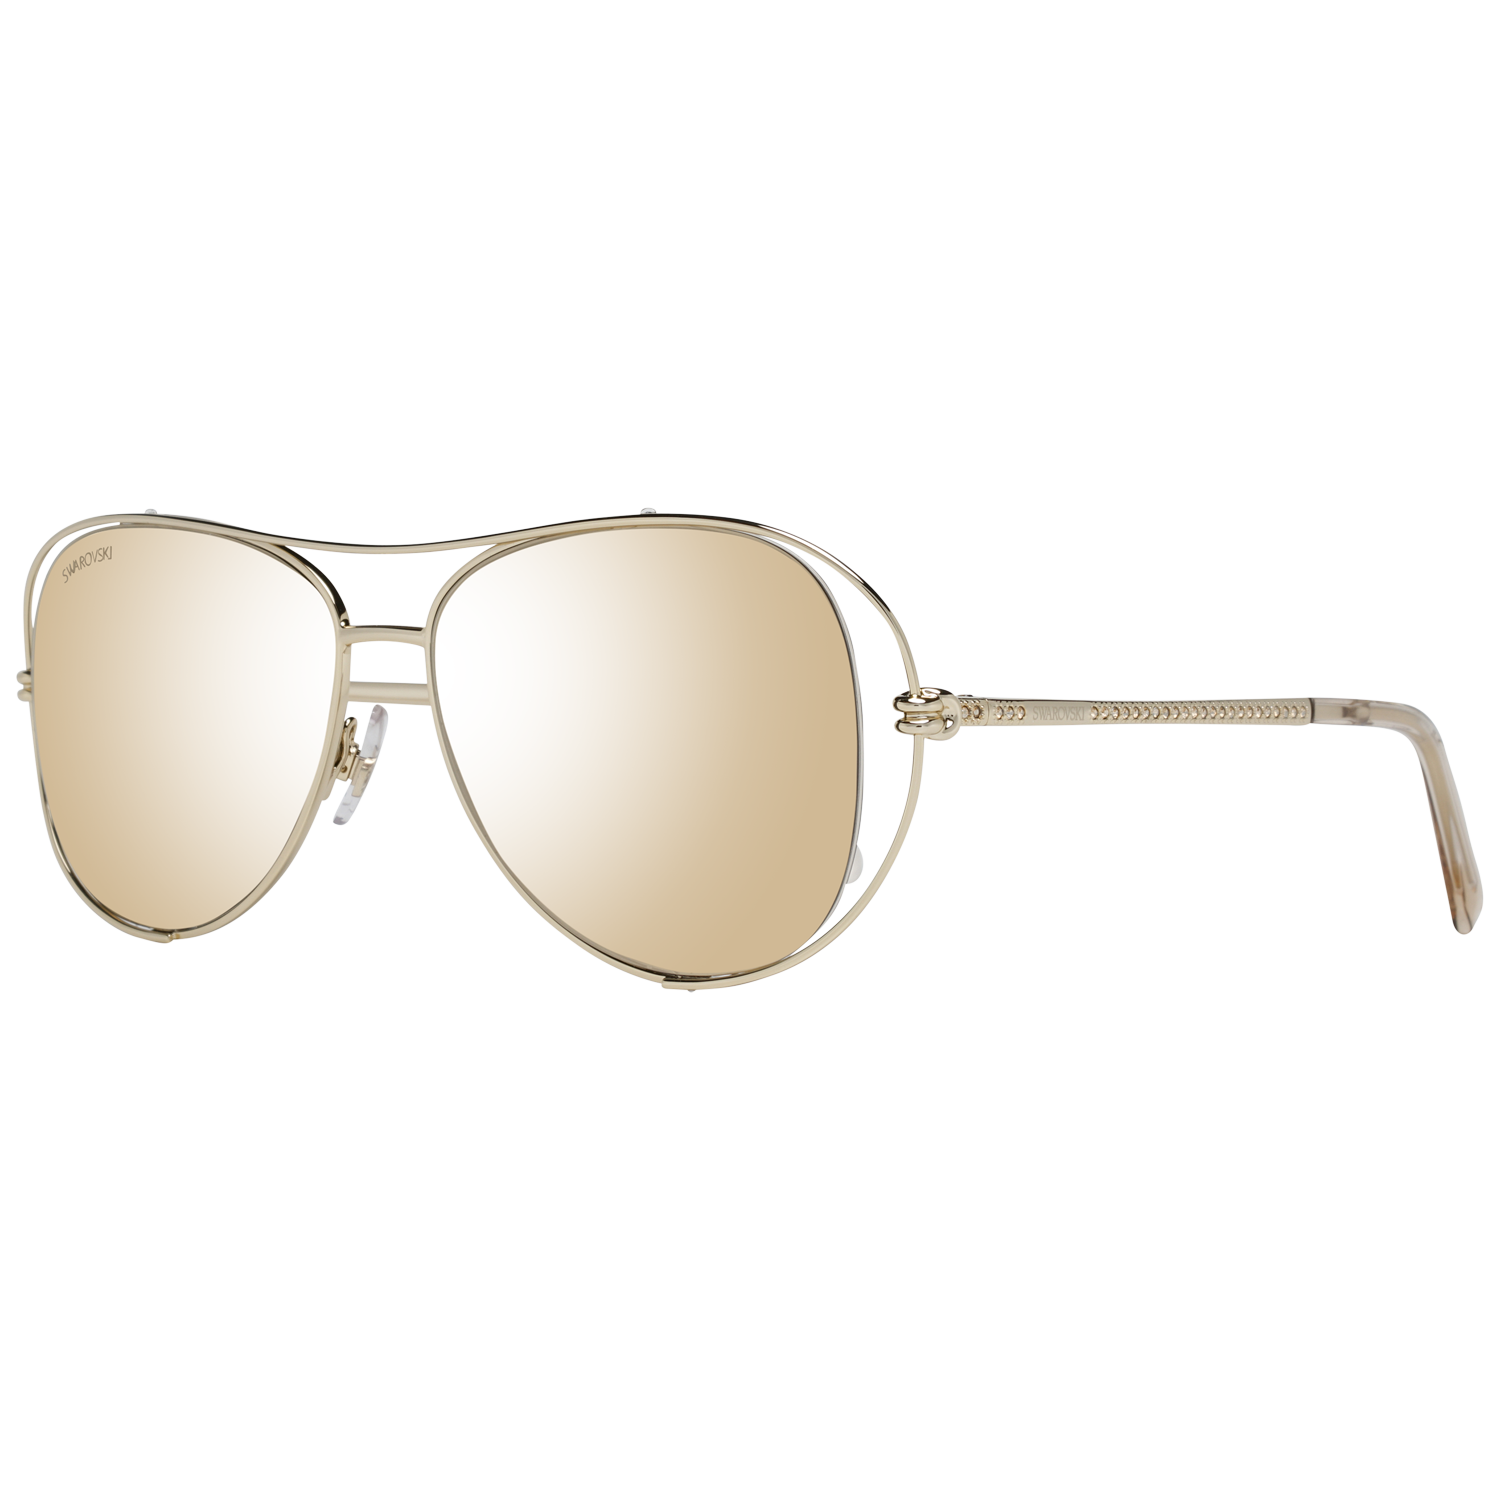 Swarovski Sunglasses Swarovski Sunglasses SK0231 32G 55 Eyeglasses Eyewear UK USA Australia 